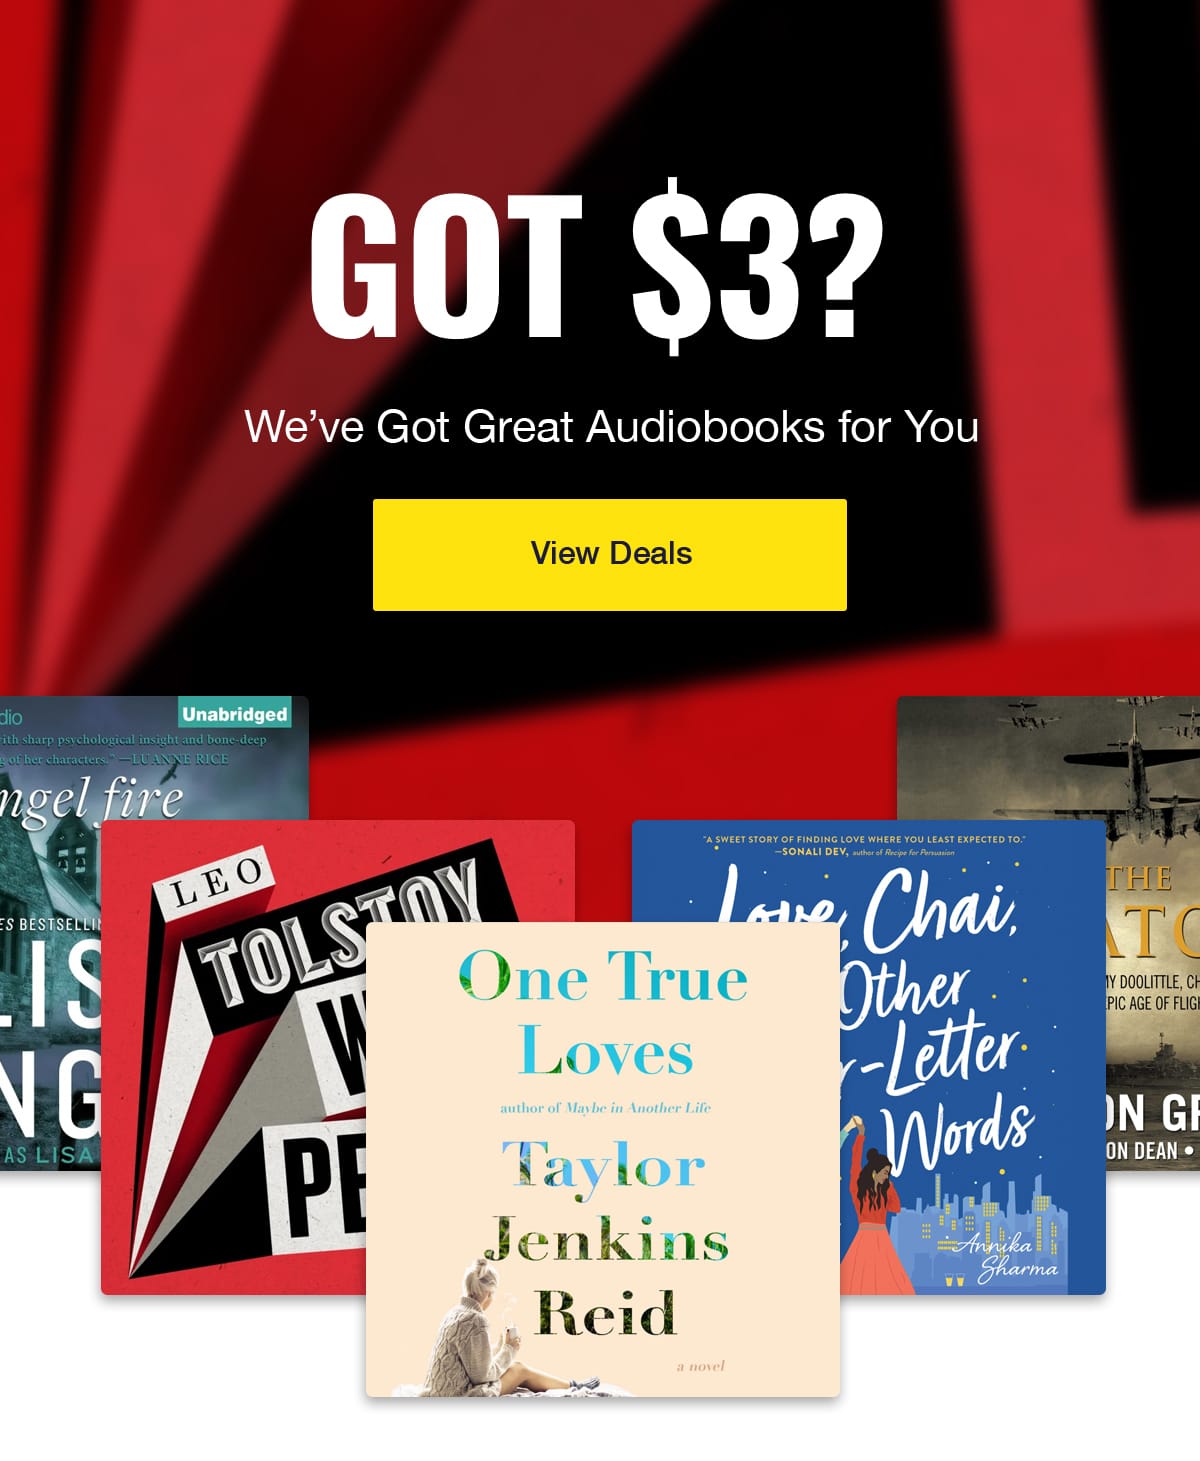 Got $3? We've Got Great Audiobooks for You